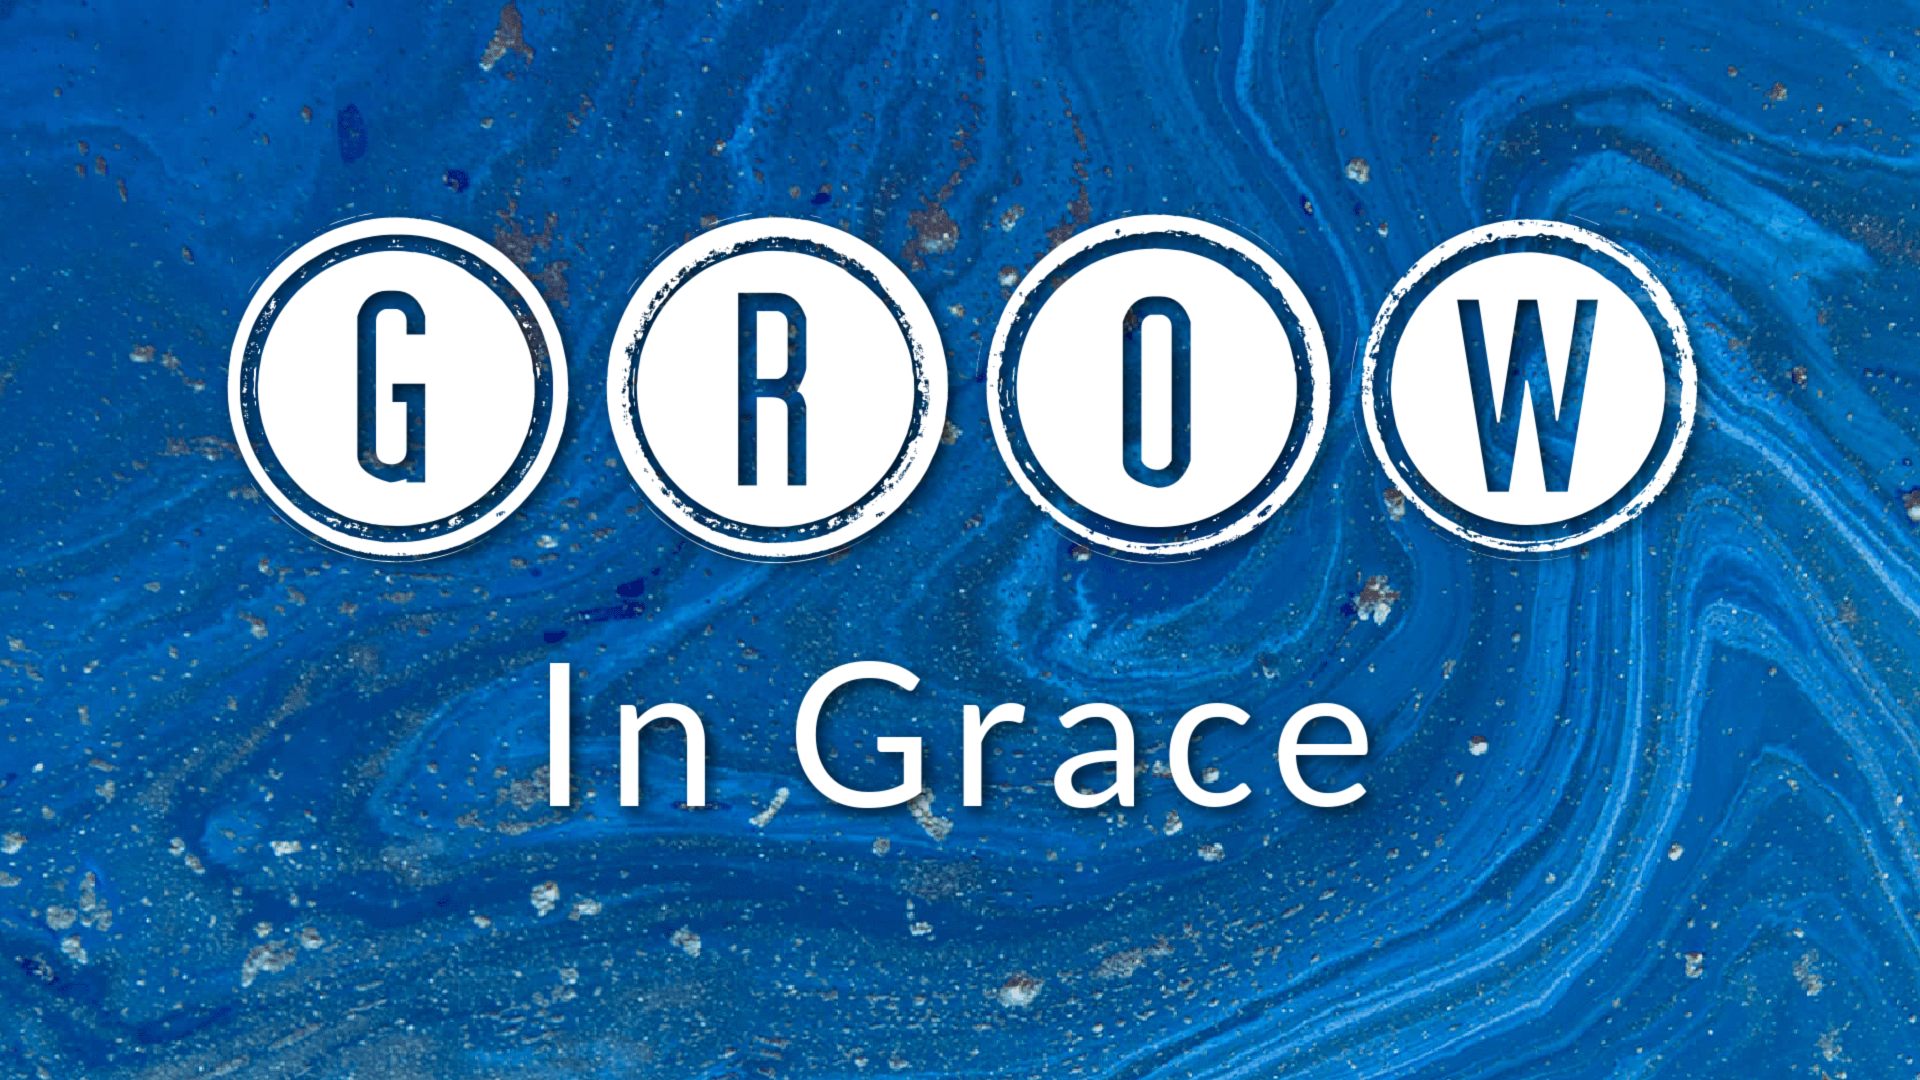 Core Values: Grow in Grace